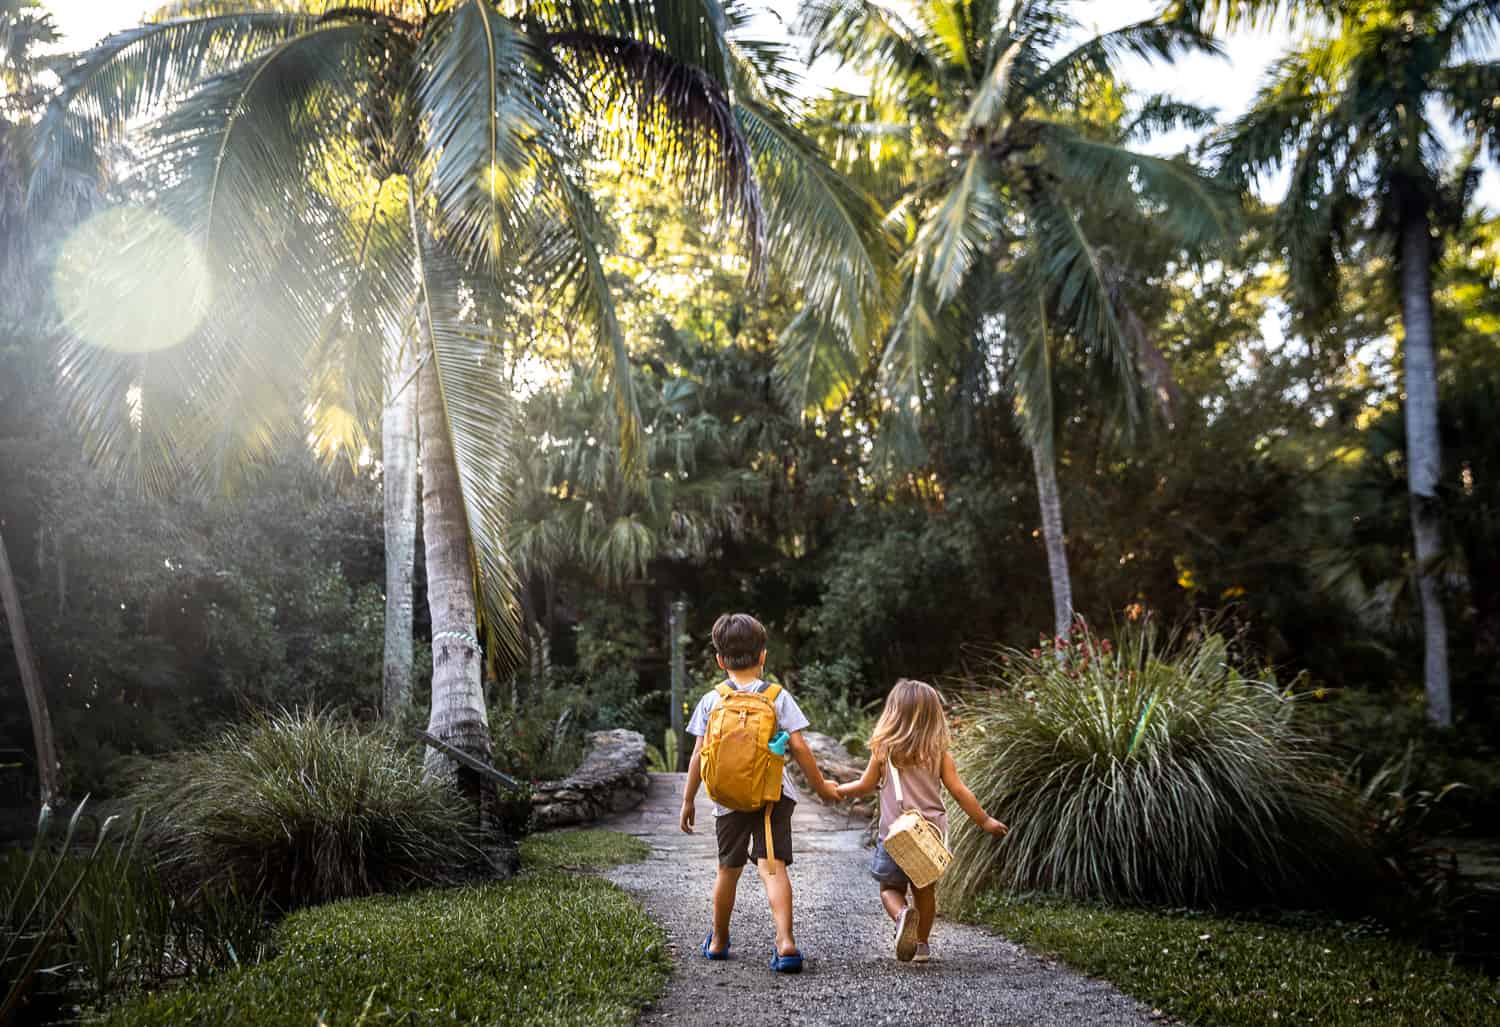 Outdoor Activities for Kids by Season • RUN WILD MY CHILD